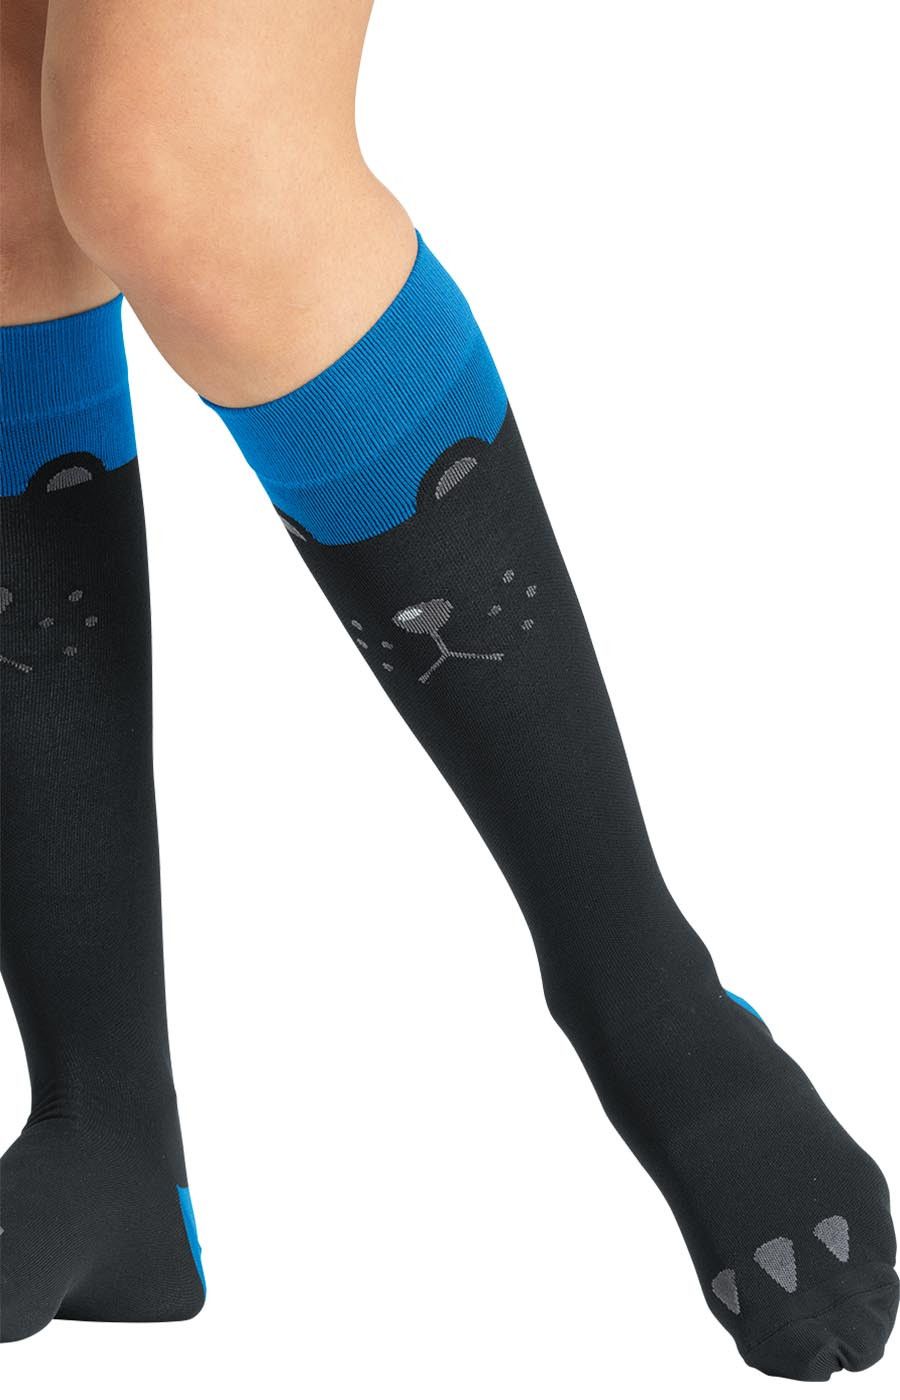 koi Med Accessories Medical socks Unisex Compression Socks 3-pk-koi Classics